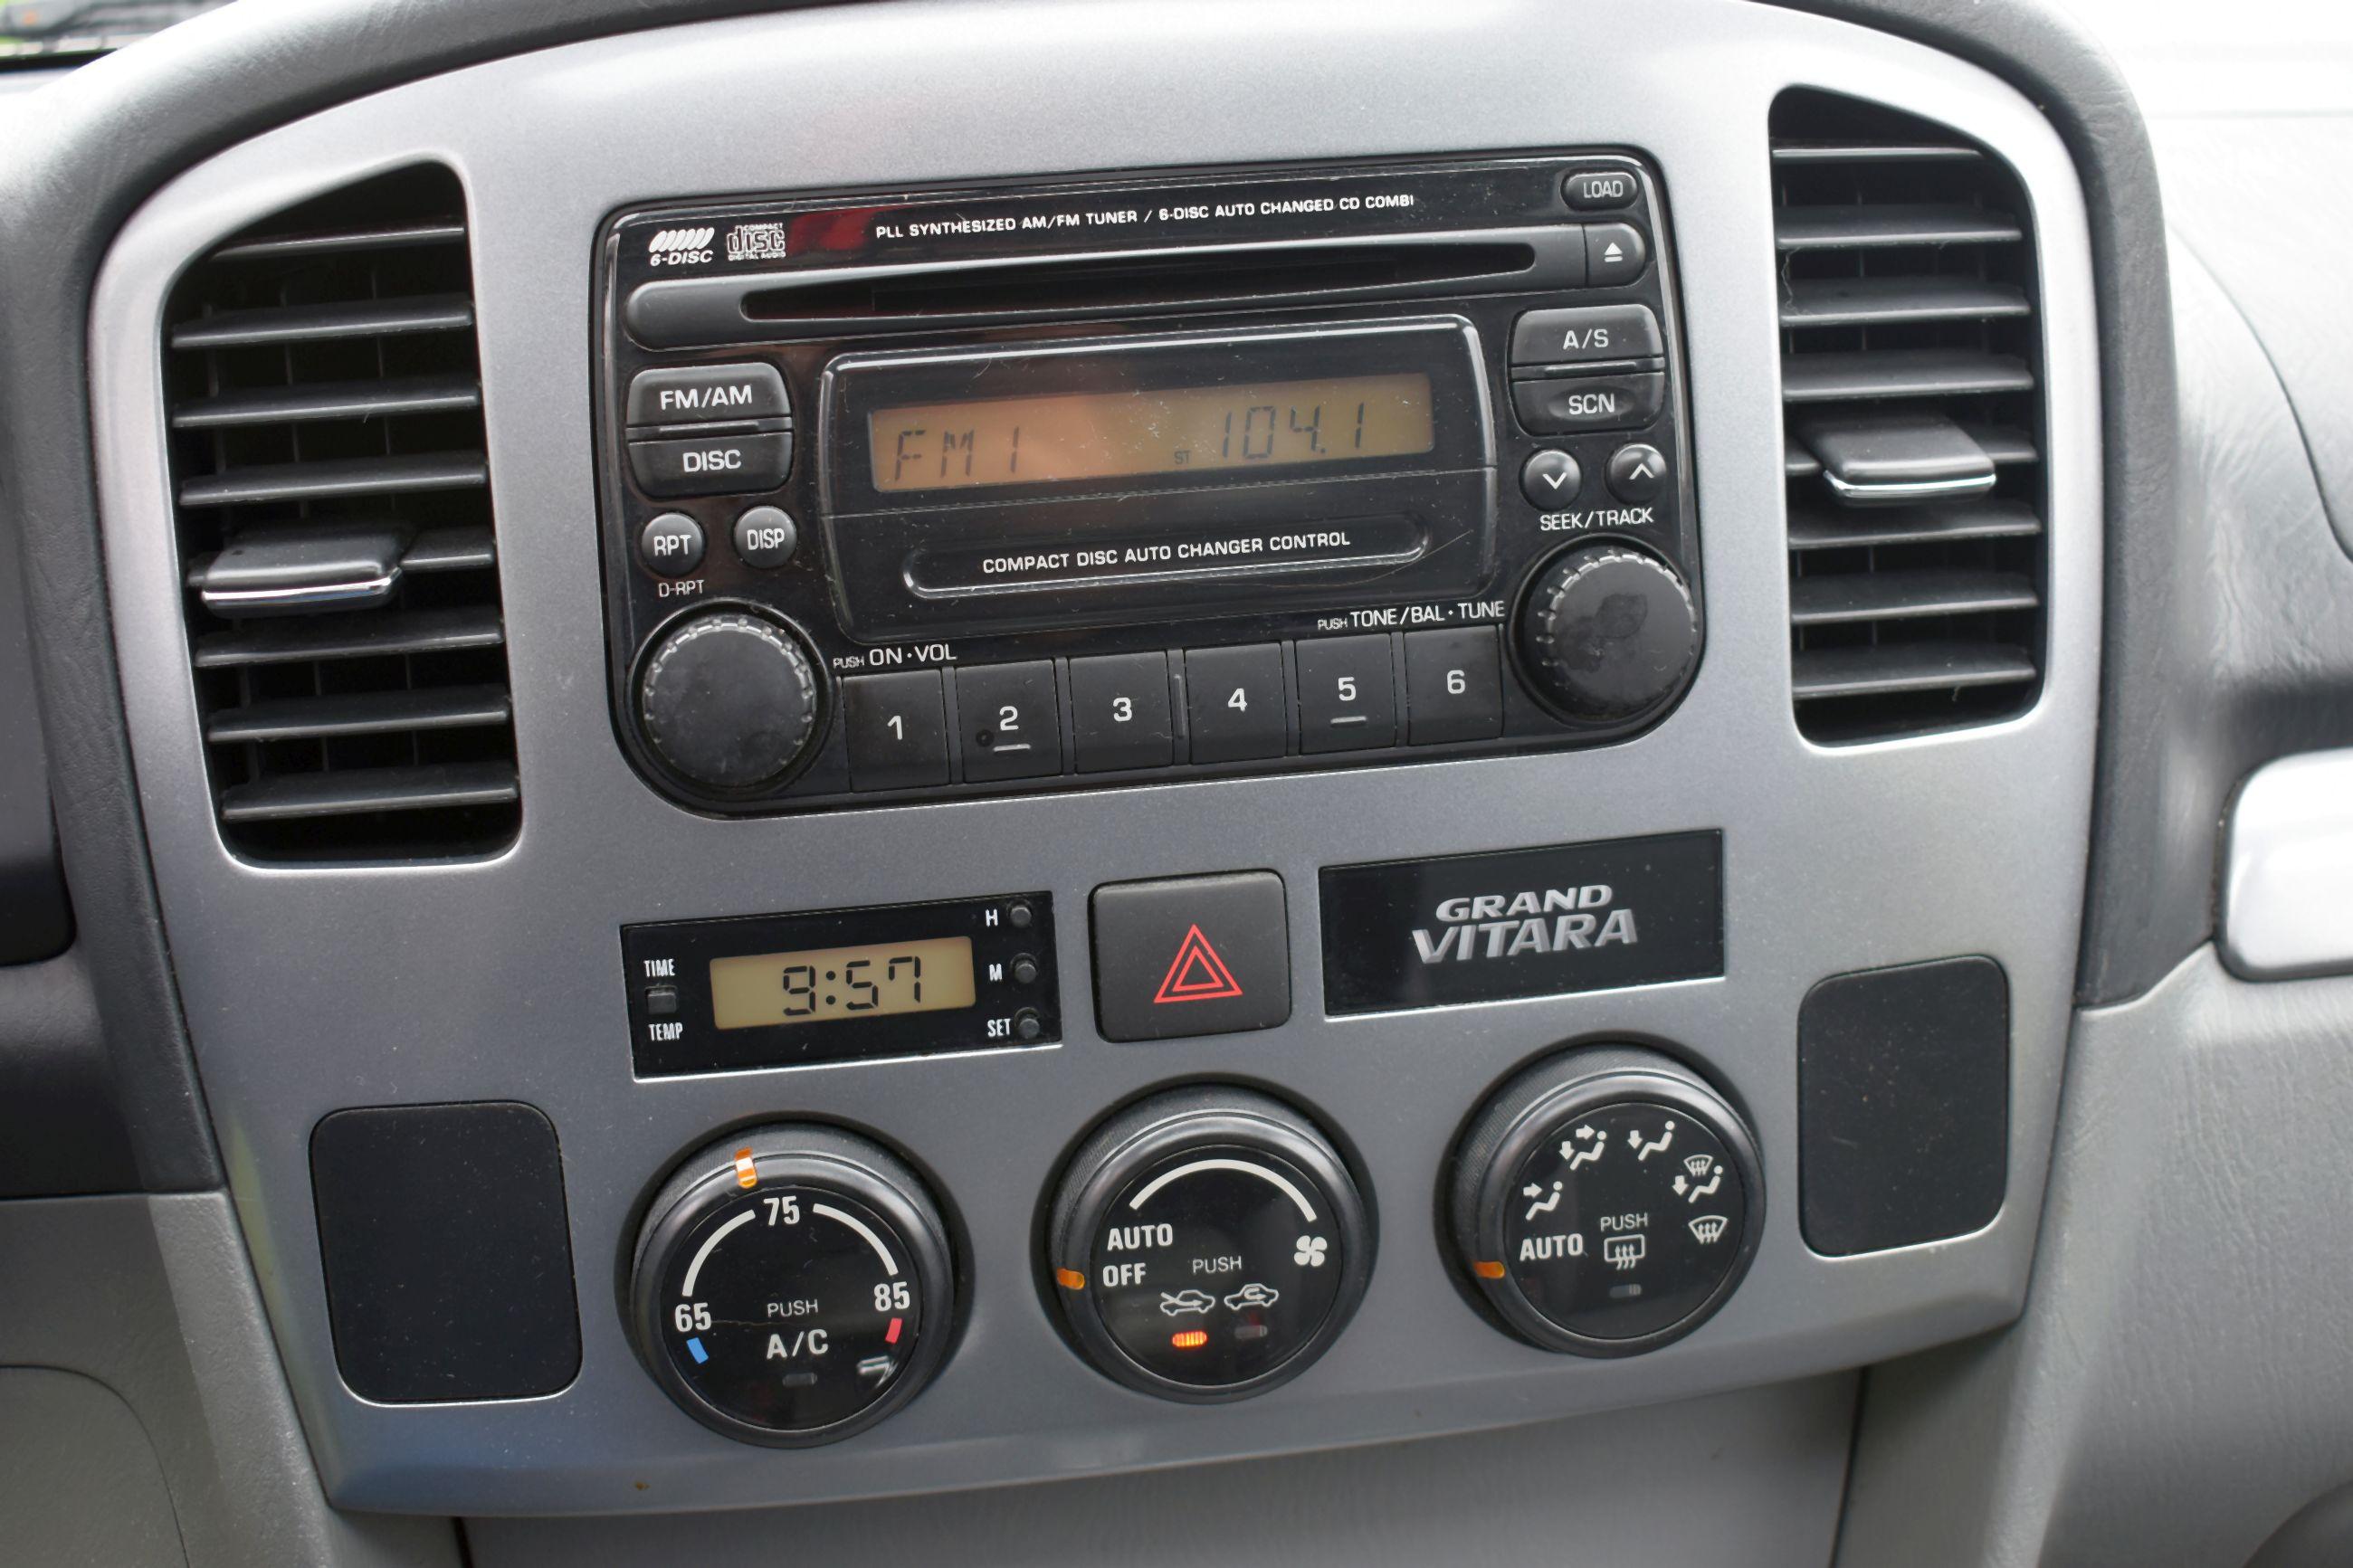 2005 Suzuki Grand Vitara, 4x4, V6, Automatic, Sunroof, Full Power, 45,244 Actual Miles, Cloth, Clean